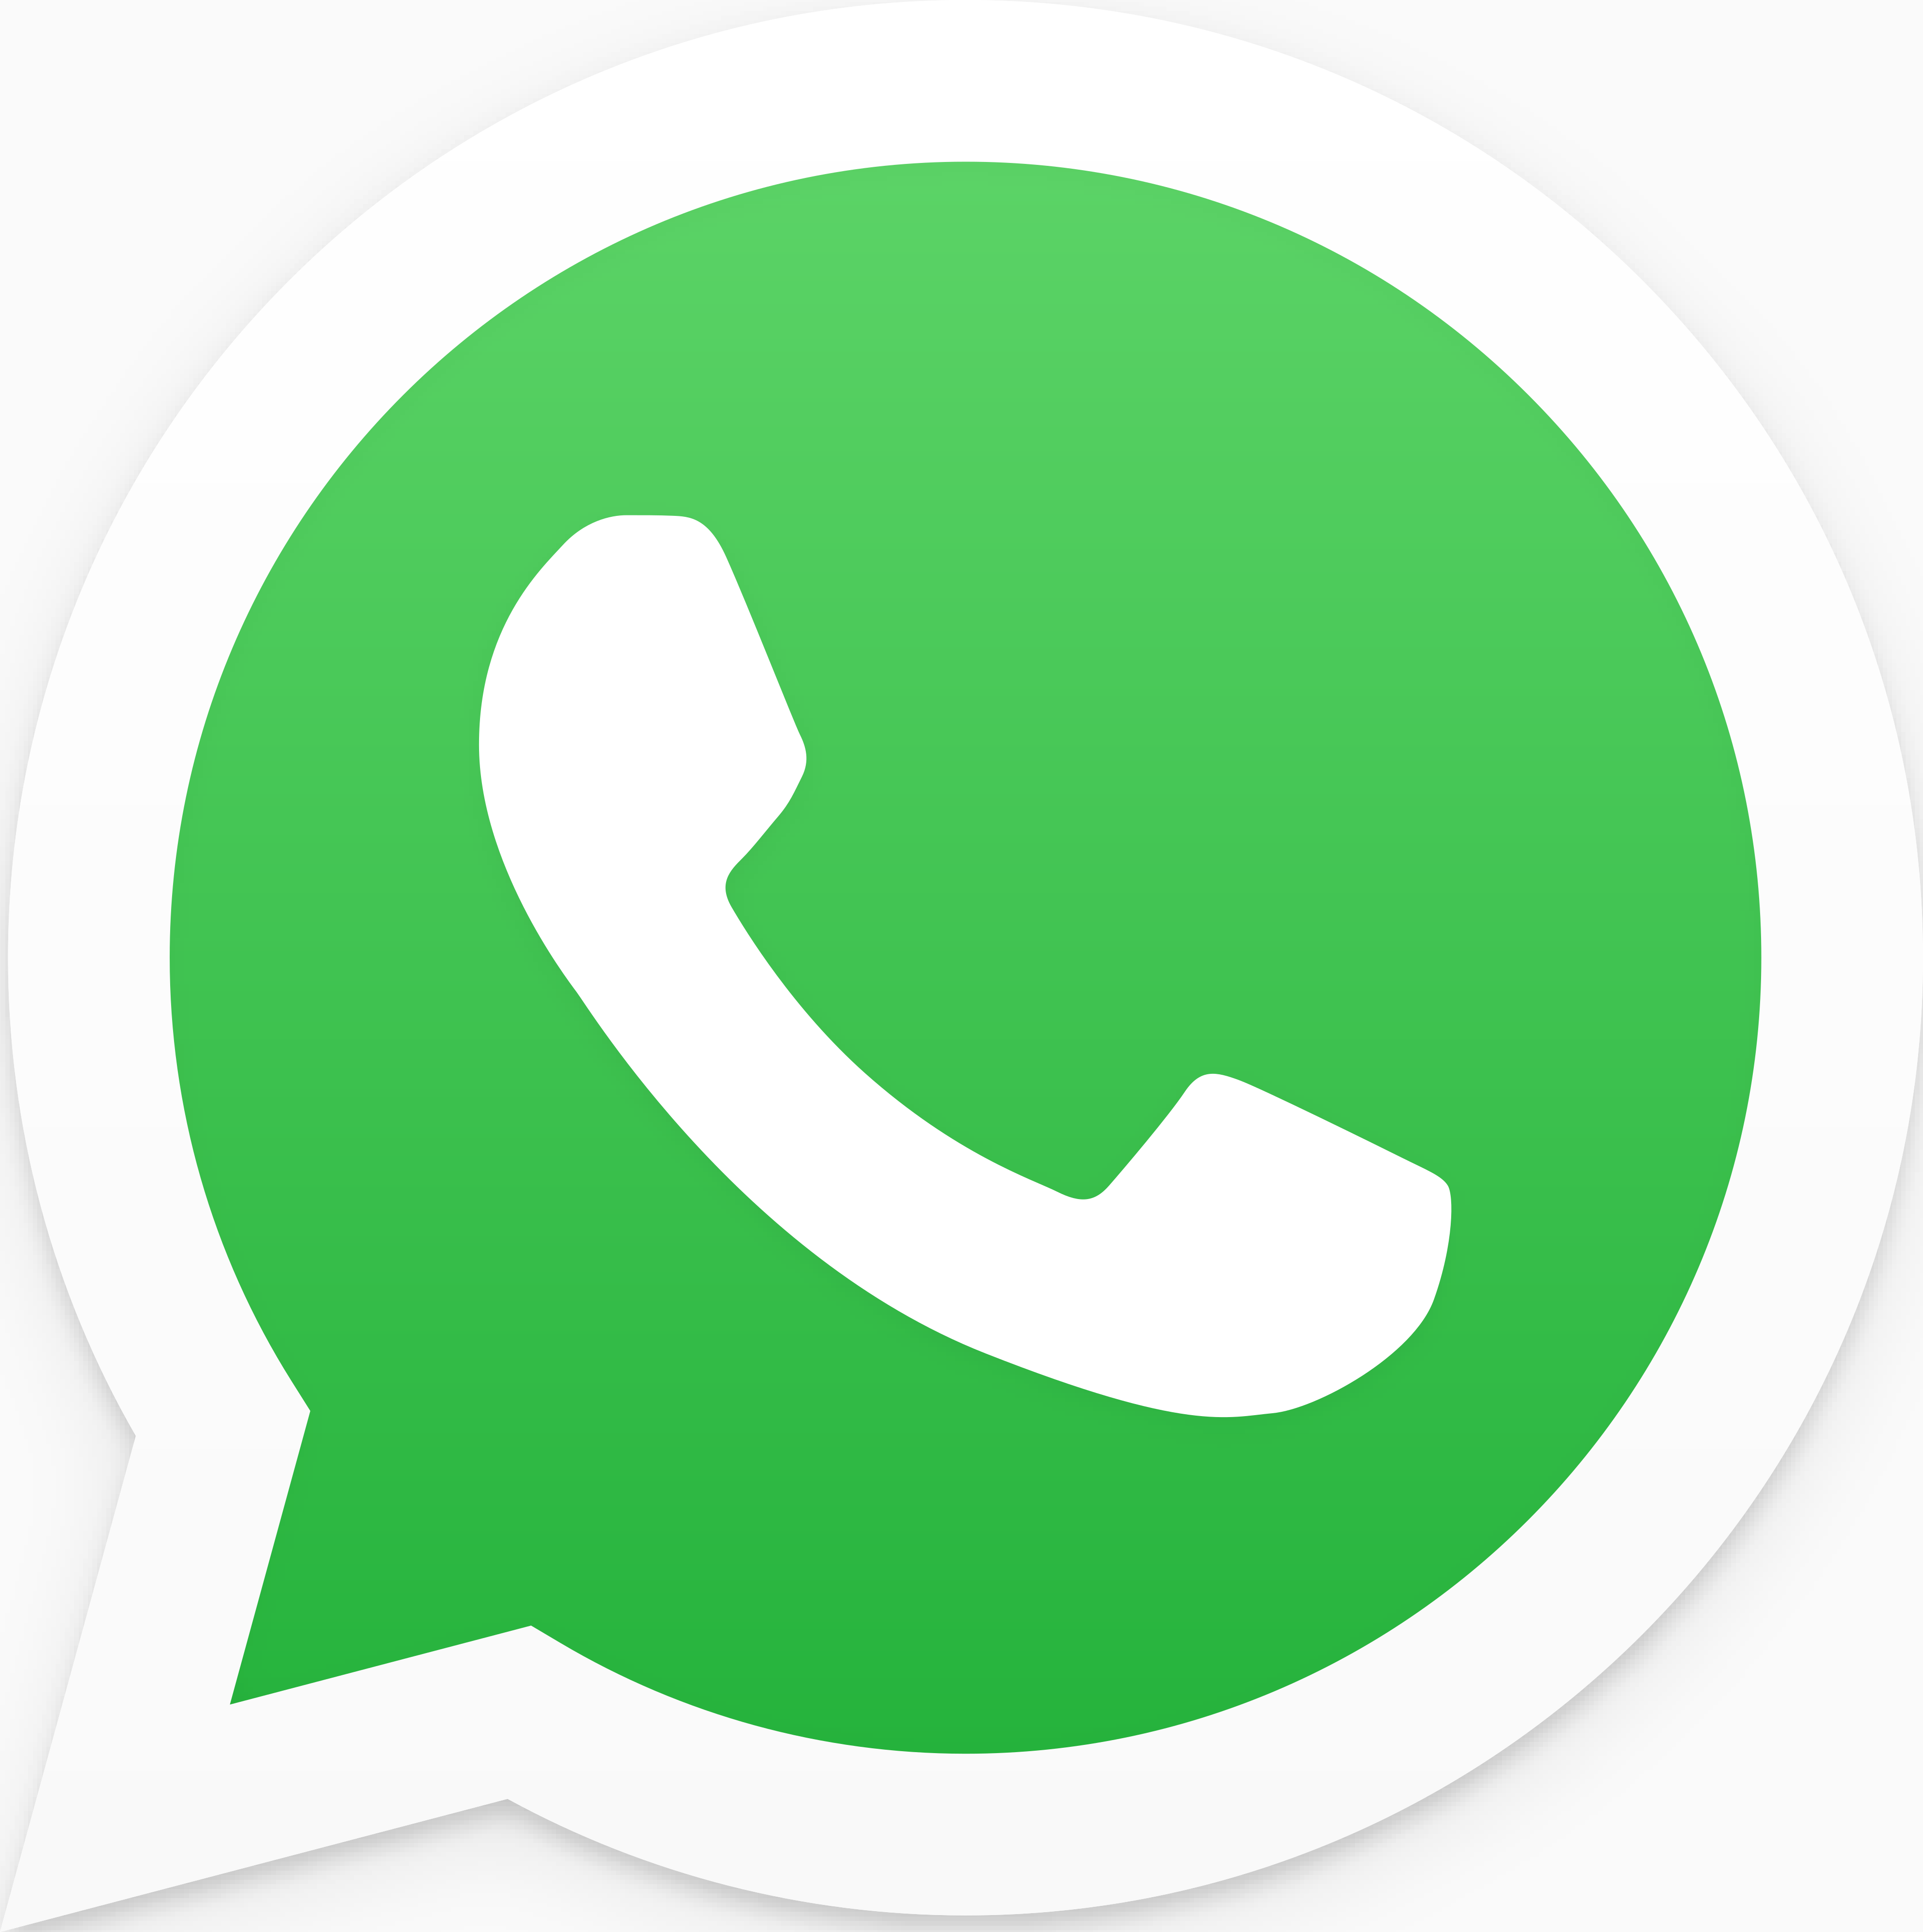 whatsapp logo 7 - Whatsapp Logo